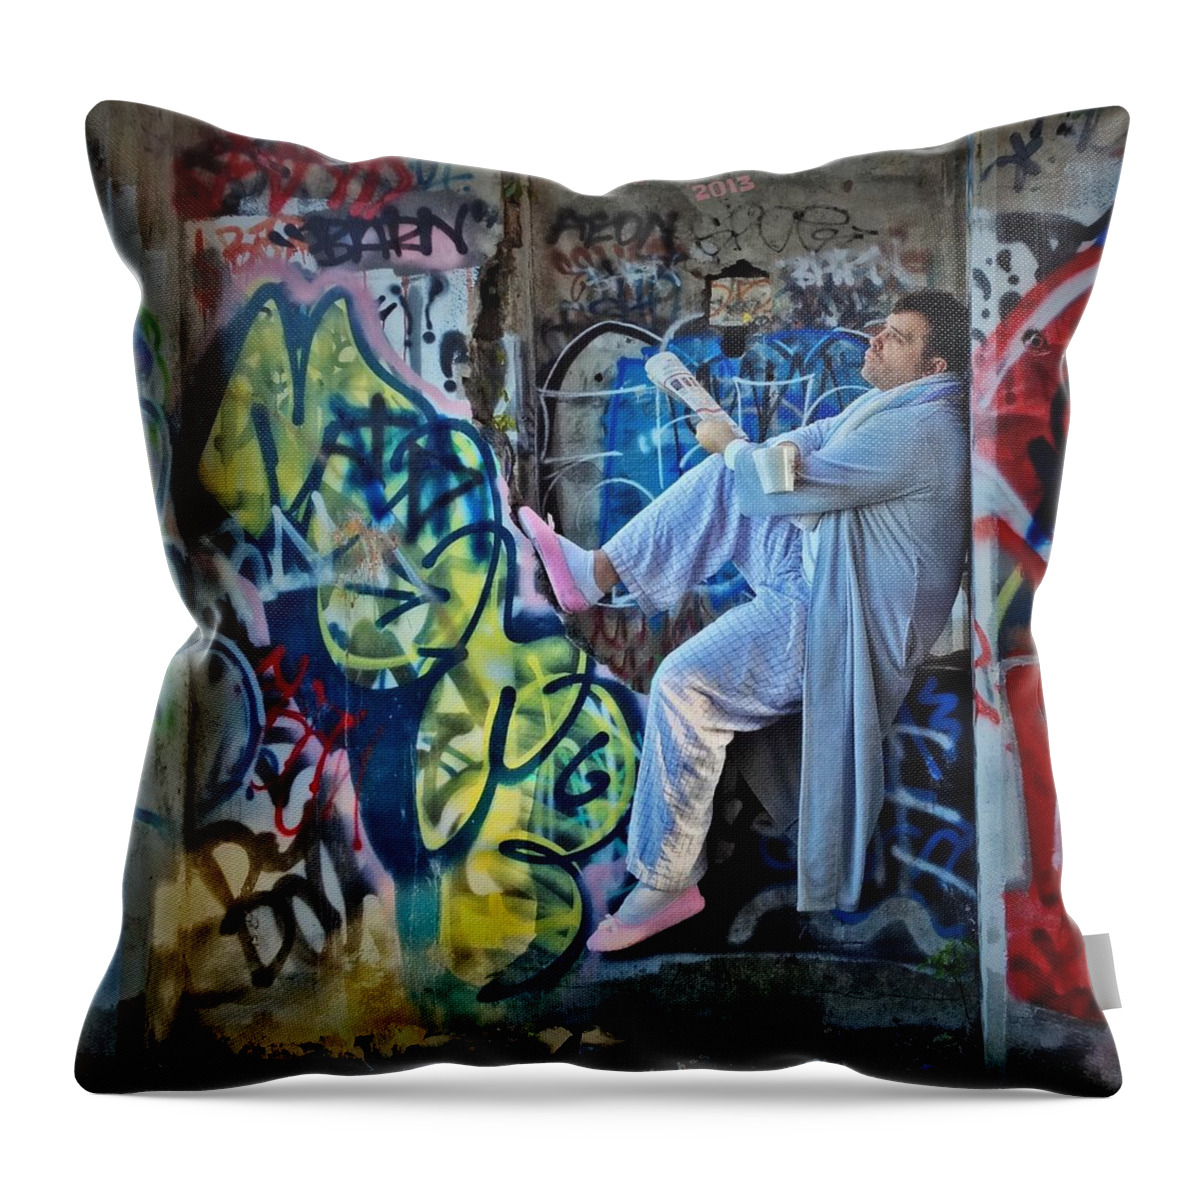 Graffiti Underground Throw Pillow featuring the photograph Dalyn at the Graffiti Underground by Victoria Porter